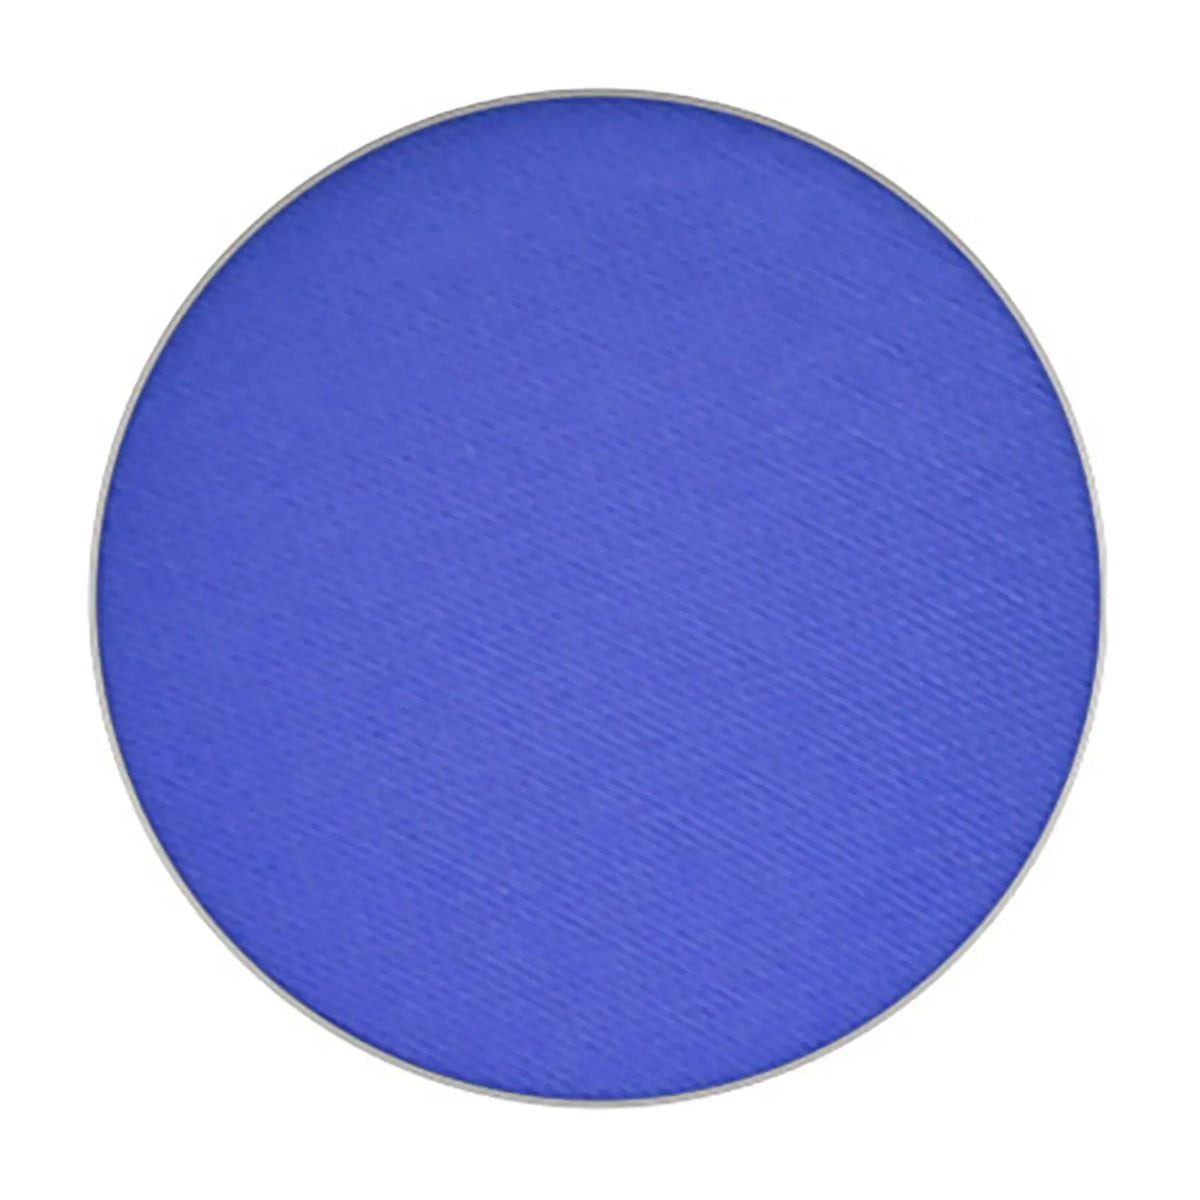 Mac Small Eyeshadow Matte Atlantic Blue 1.5 Gr - MEDUSÉ